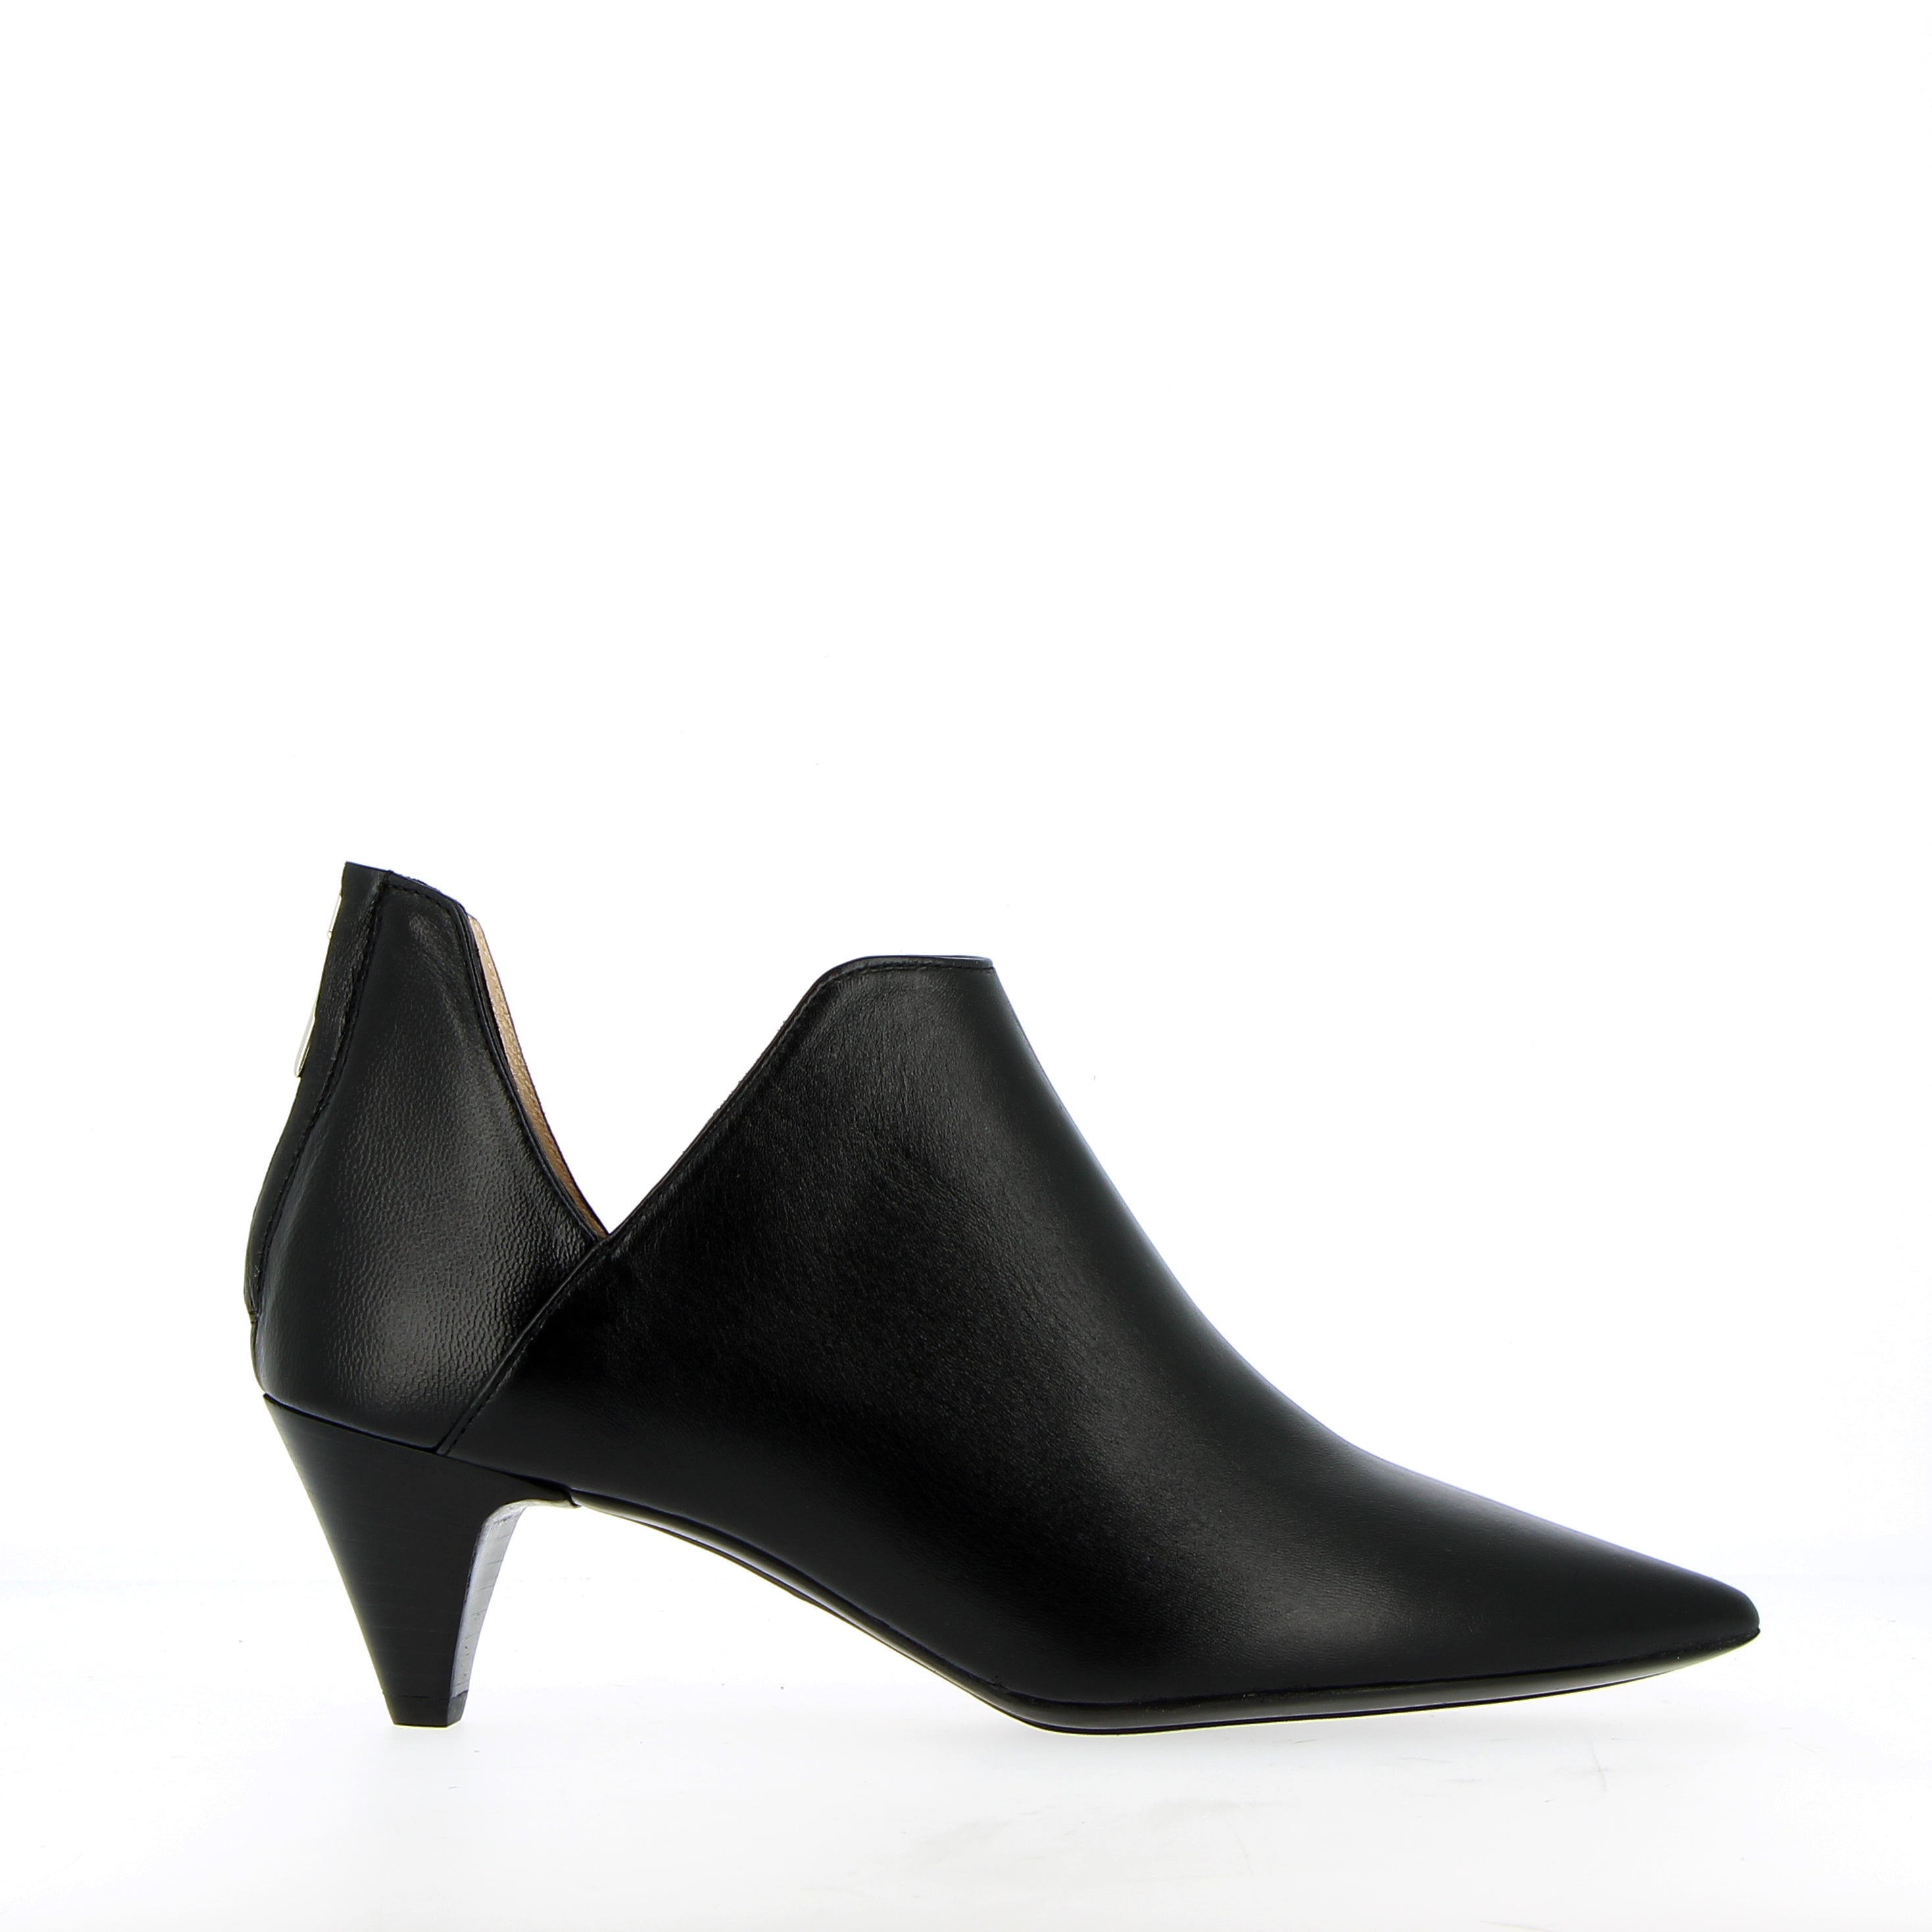 Medium heel V cut black nappa ankle boot